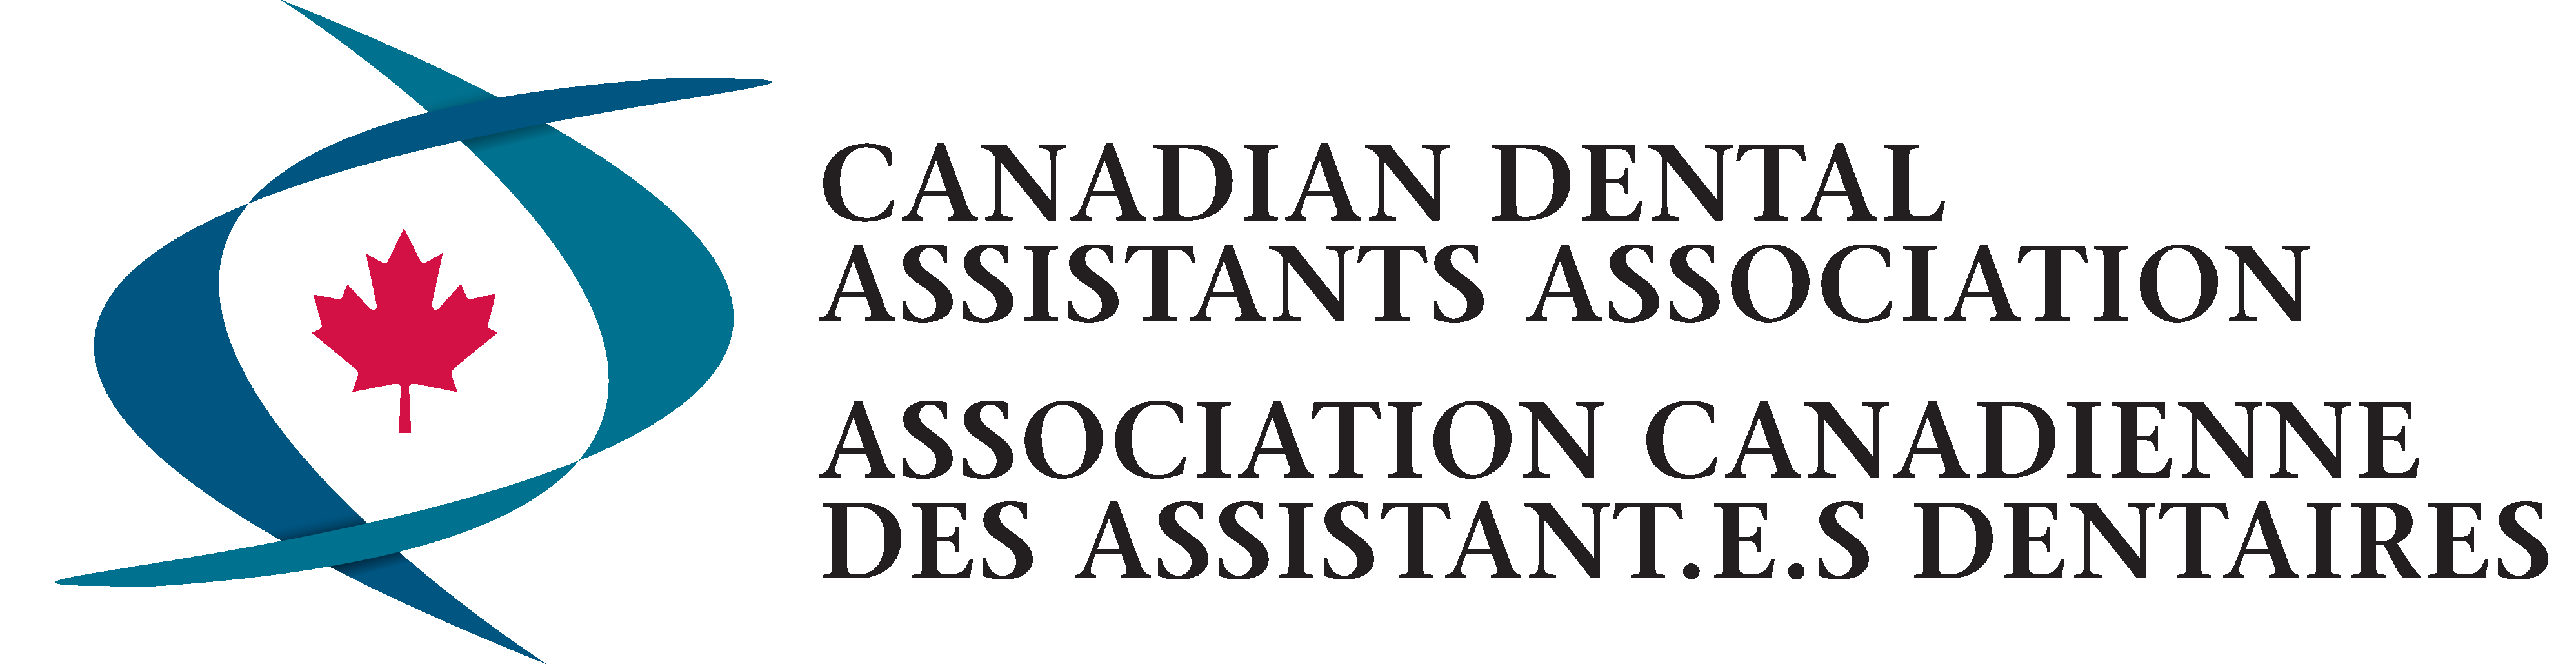 Calgary Dental Assistant's Association